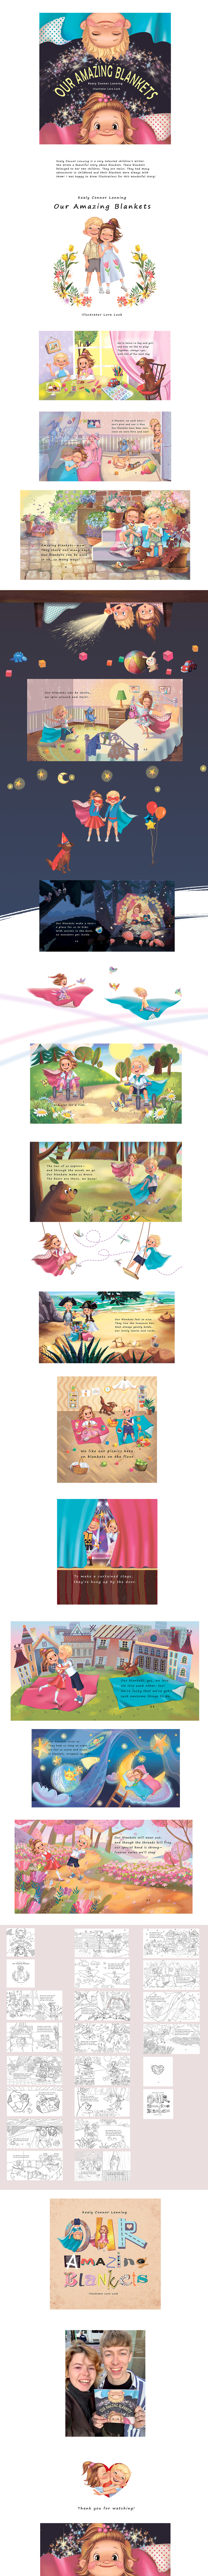 children's book children's illustration